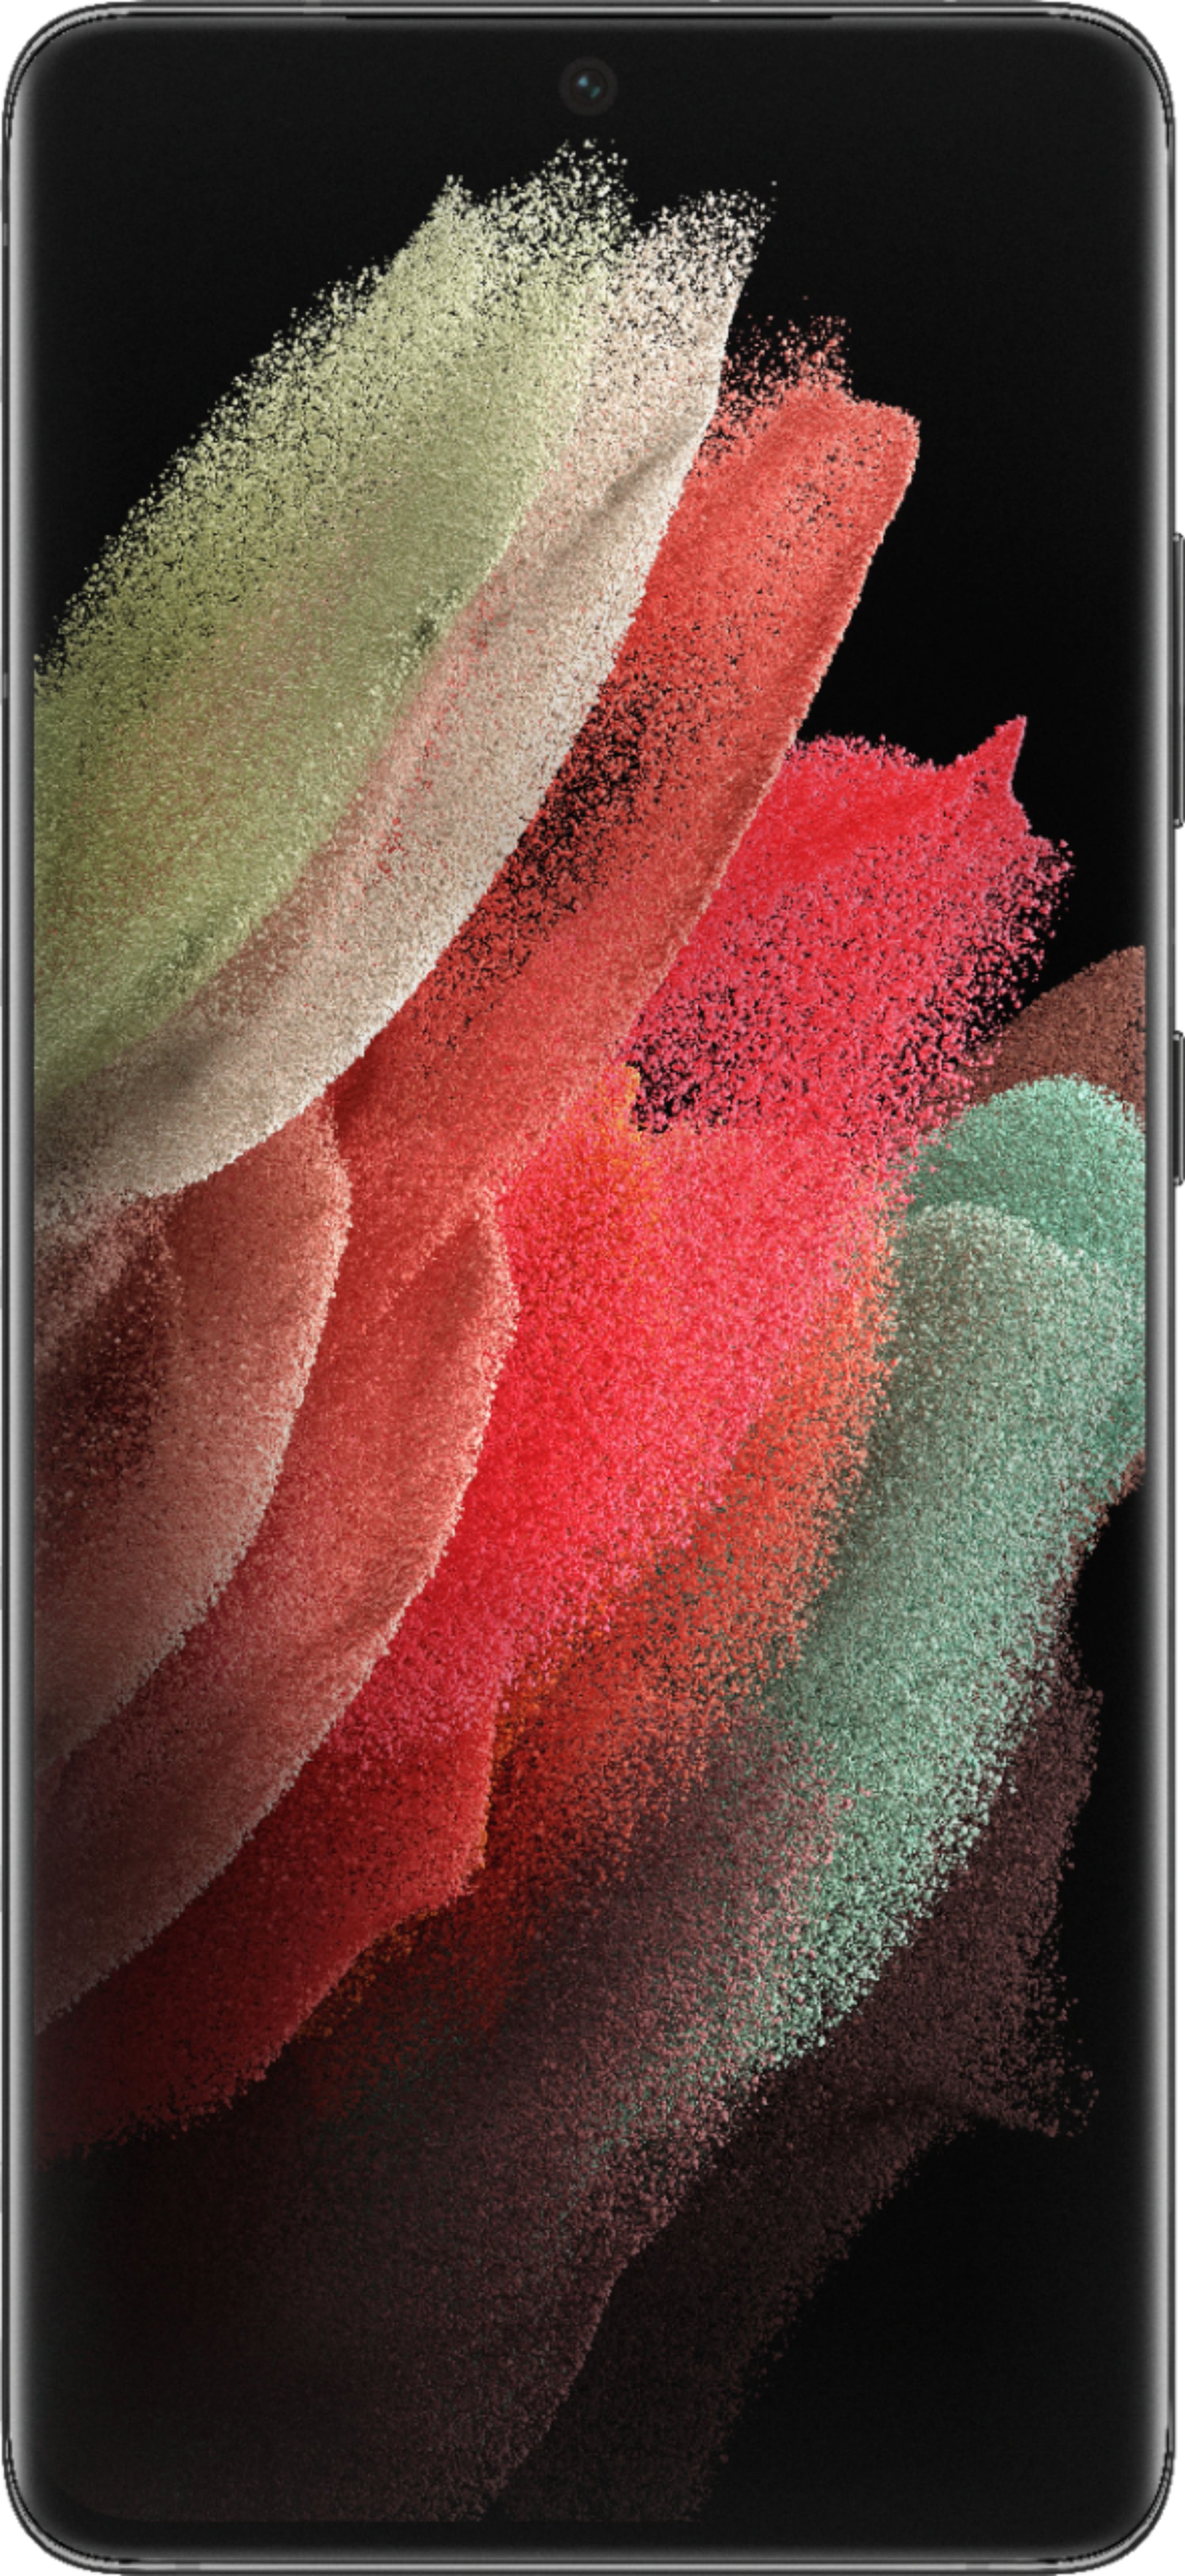 Samsung Galaxy S21 Ultra 5g 128gb Phantom Black At T Eb Bg998aby Best Buy